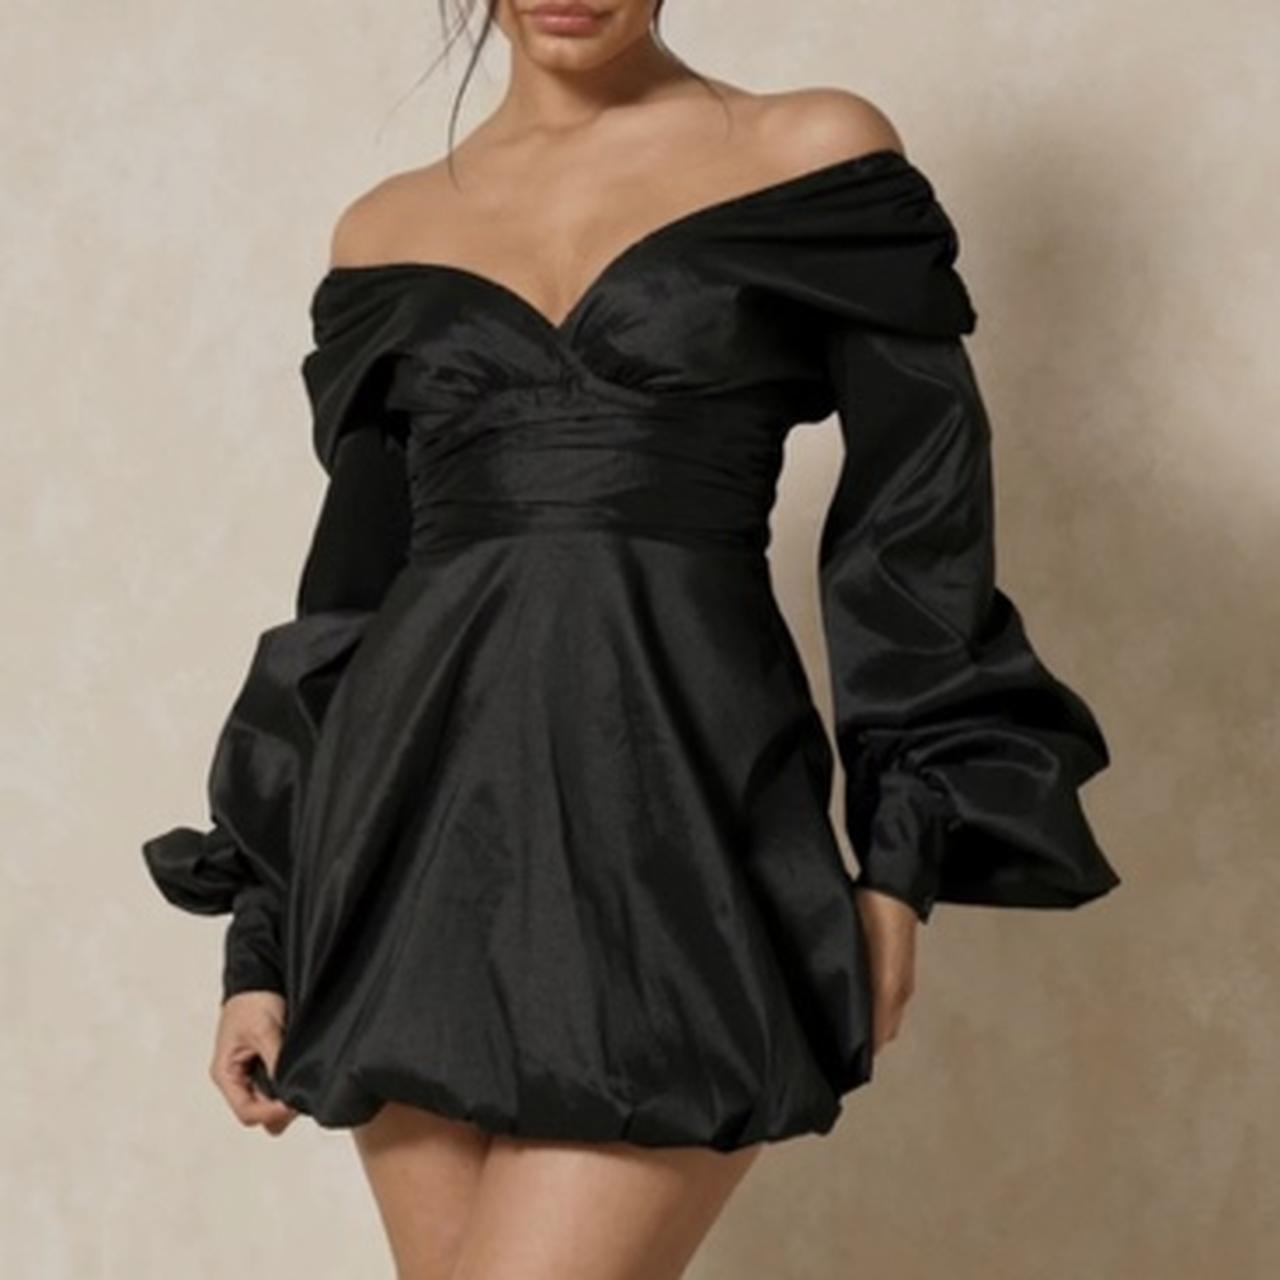 Product Image 1 - Black MISSPAP dress! Worn one